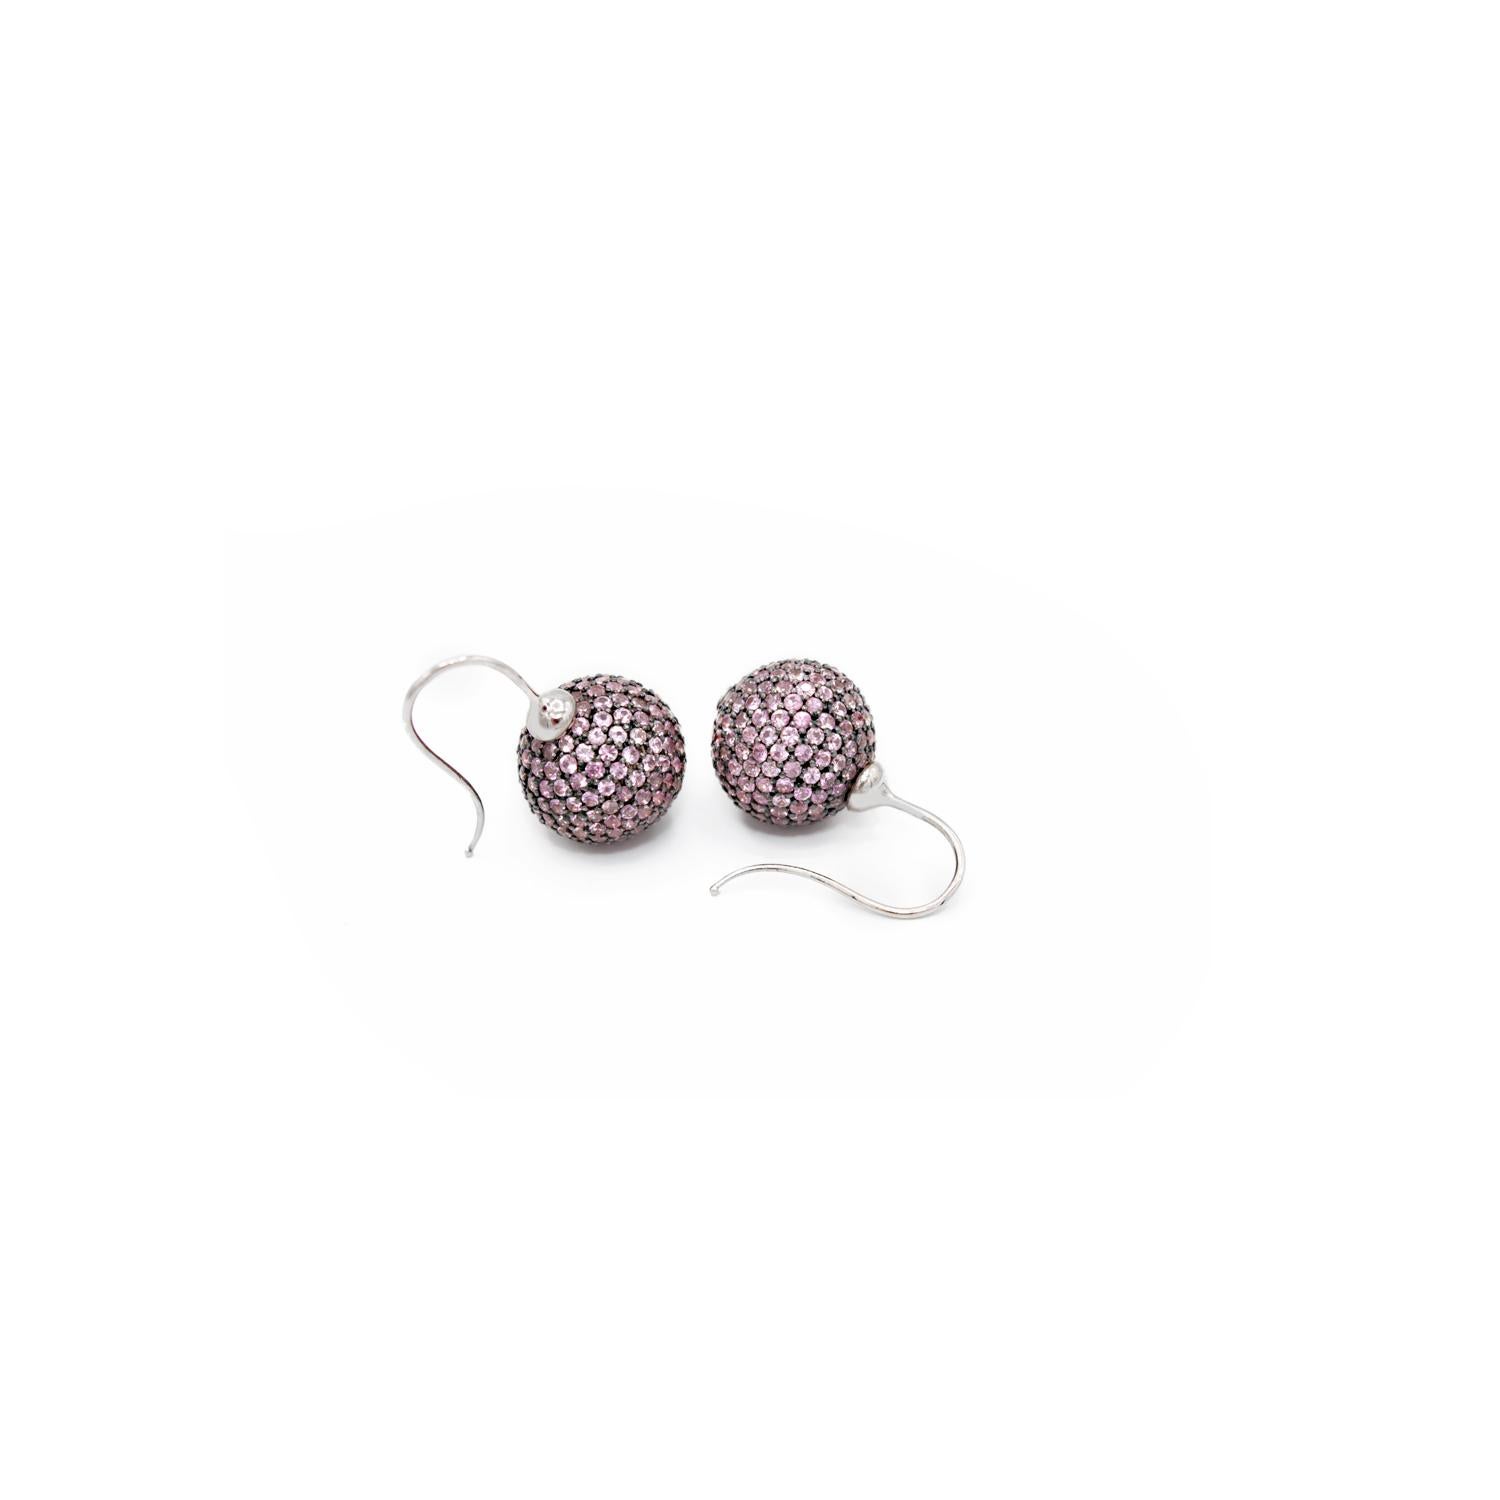 Brilliant Cut Pink Sapphires pave 18 Karat White Gold Earrings